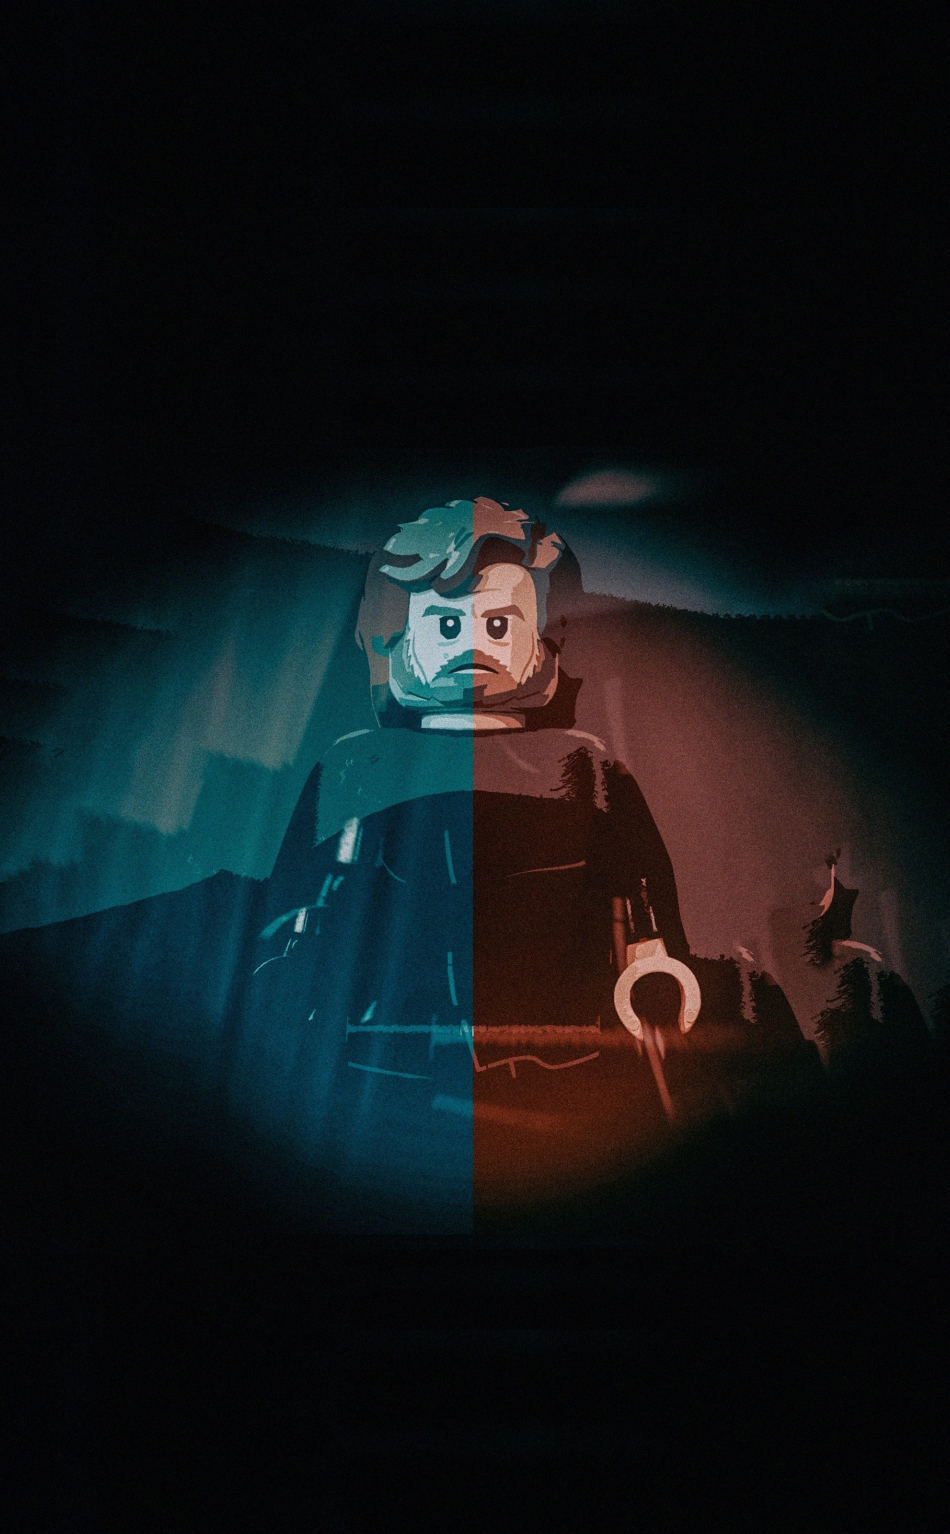 Download 950x1534 Wallpaper Lego Luke Skywalker Video Game Star Wars Iphone 950x1534 Hd Image Background 16697